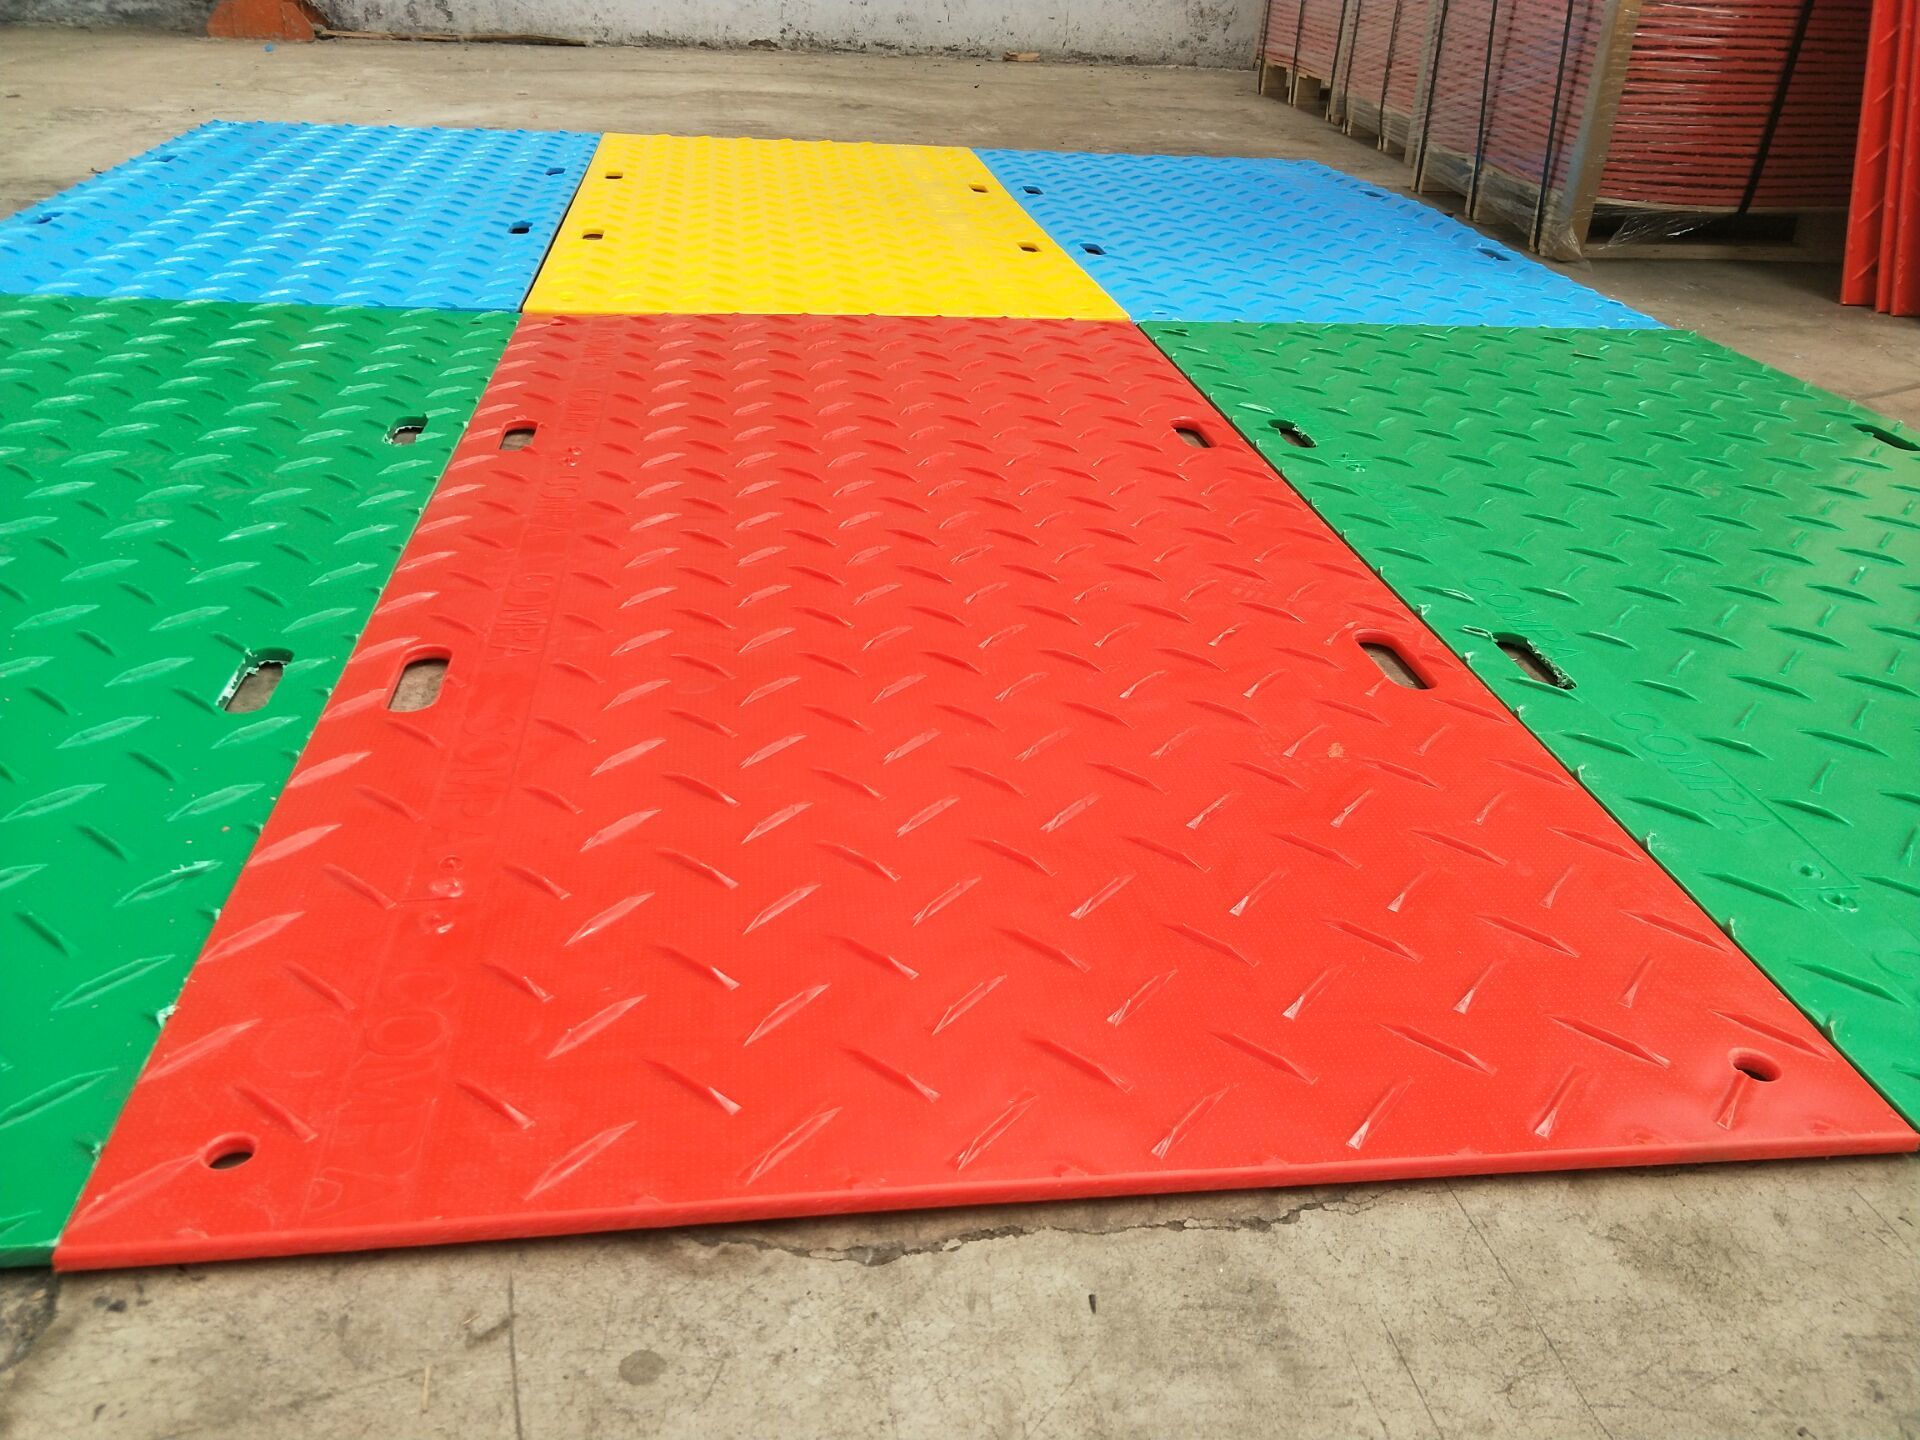 Heavy equipment access mats -access mats and temporary roads